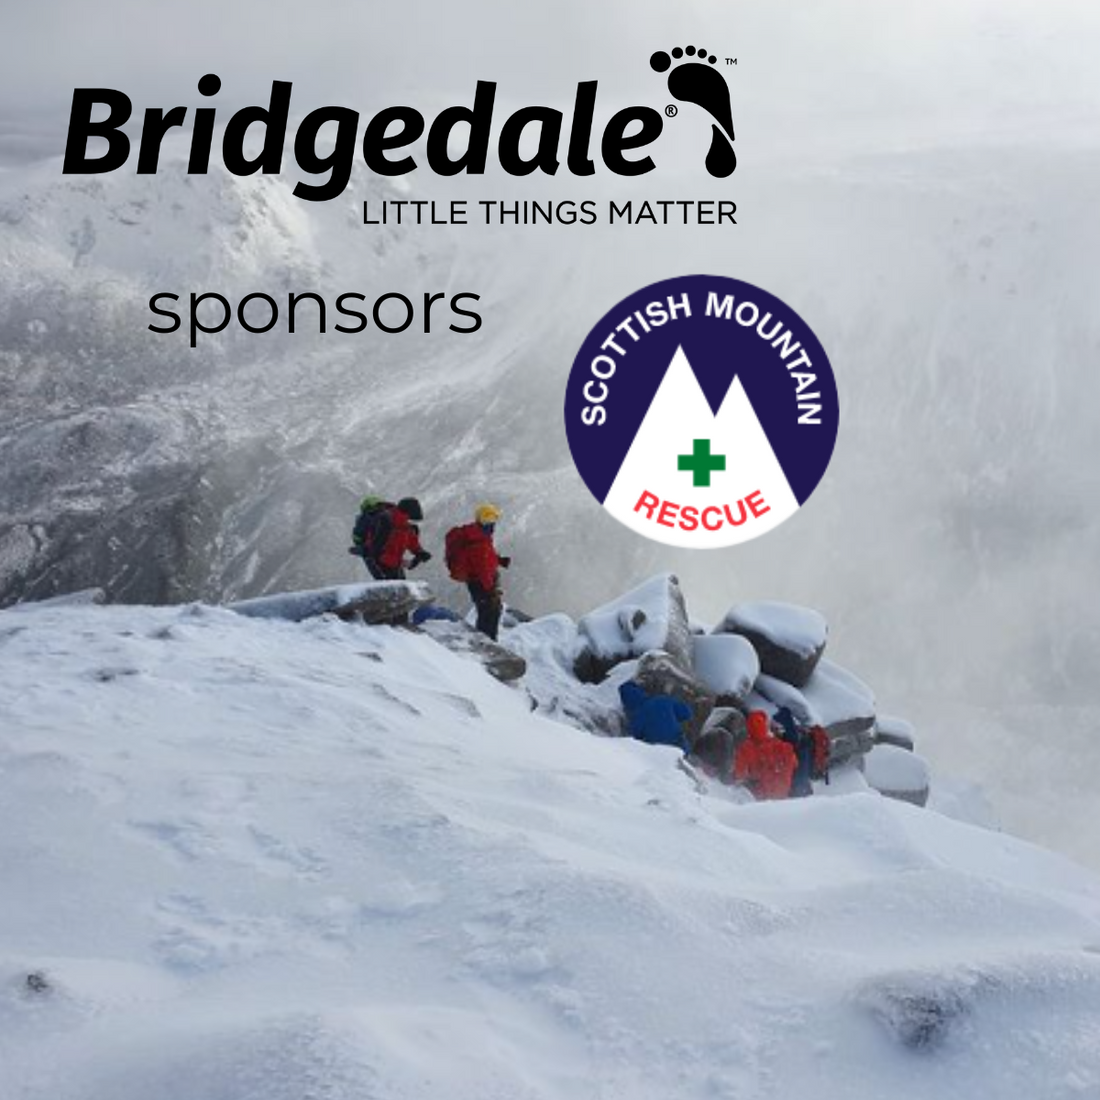 Bridgedale supports Scottish Mountain Rescue